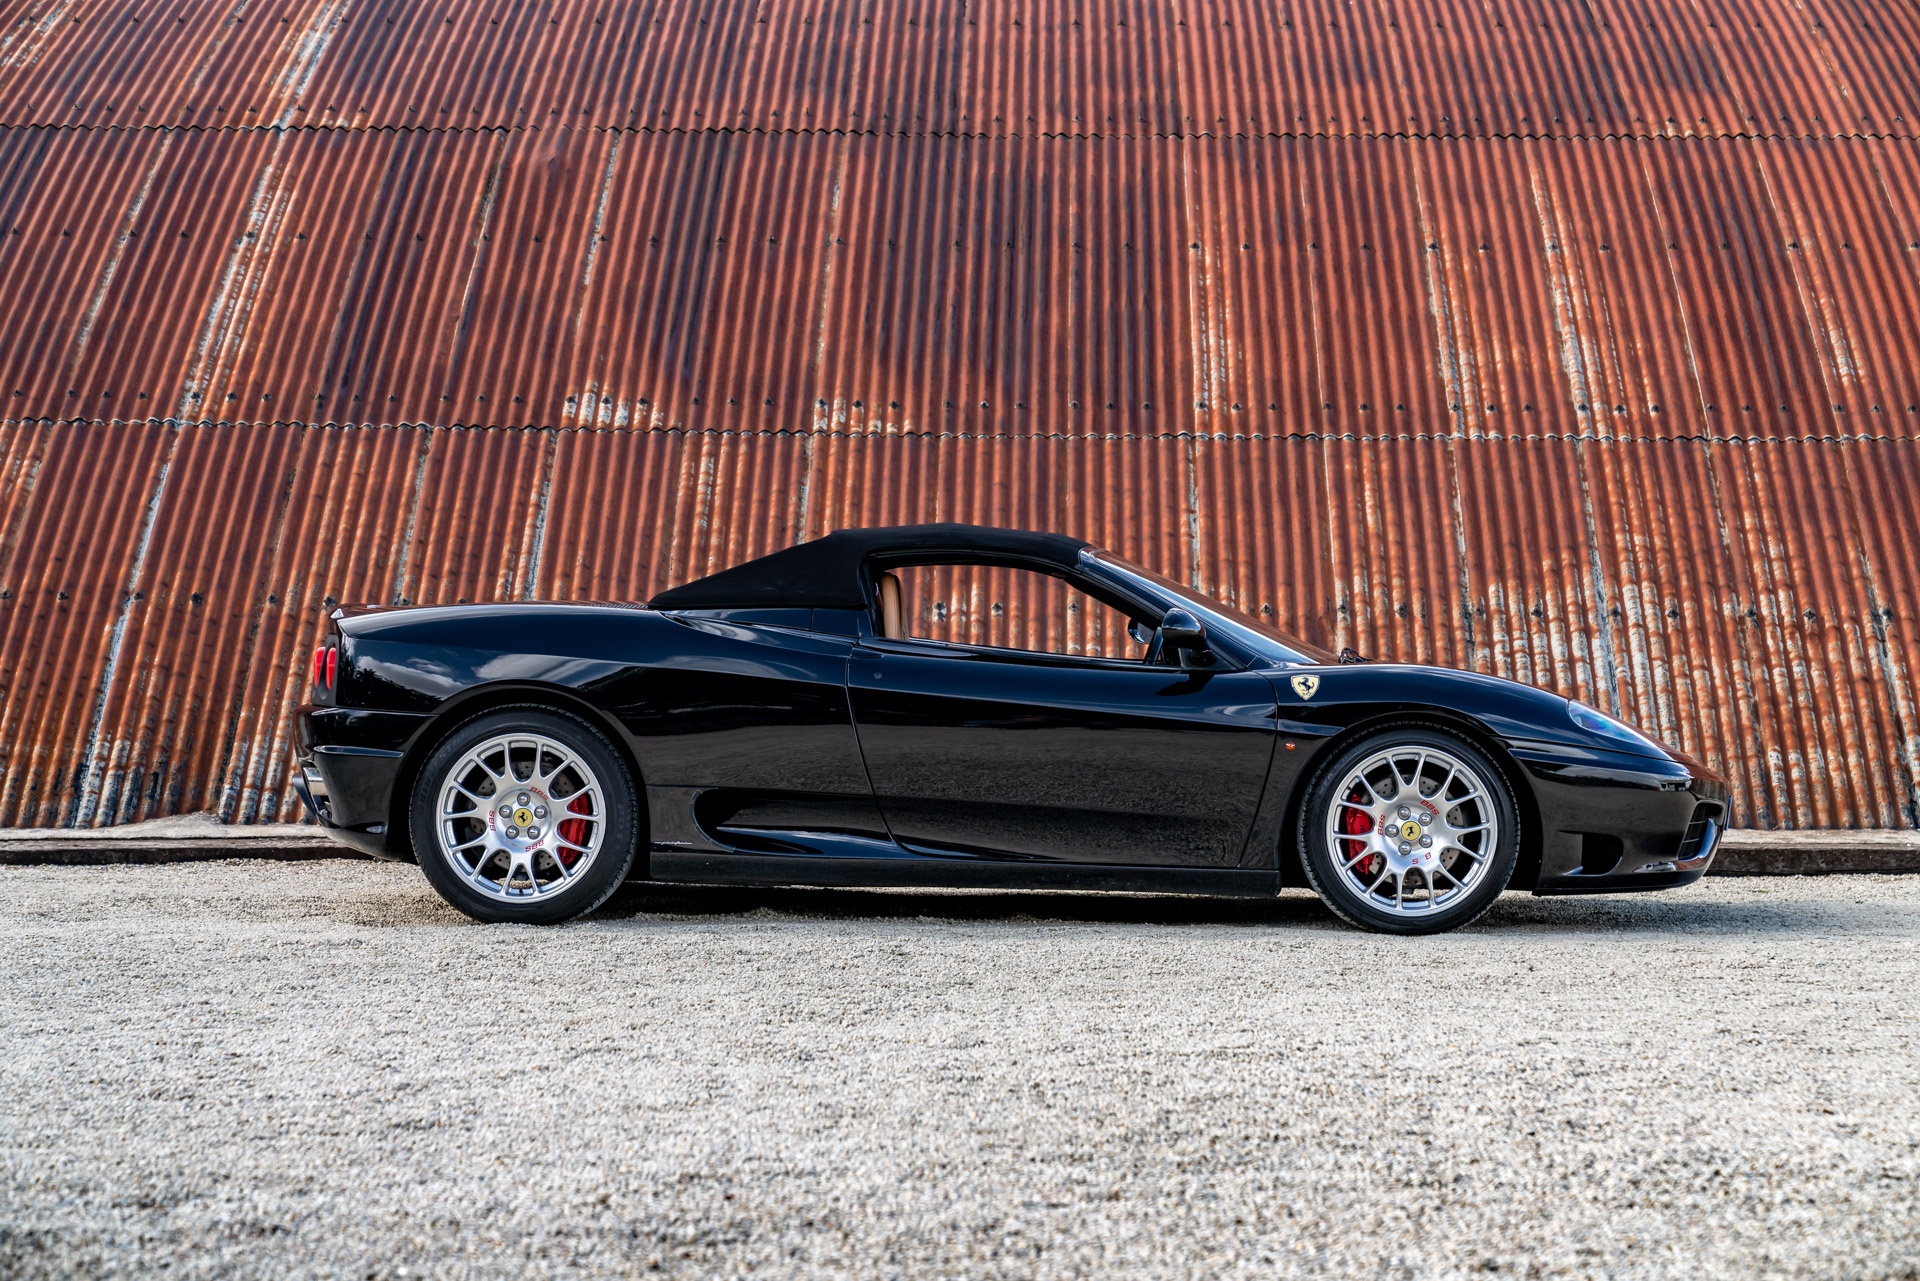 Ferrari-360-Spider-David-Beckham-anh-10.jpeg